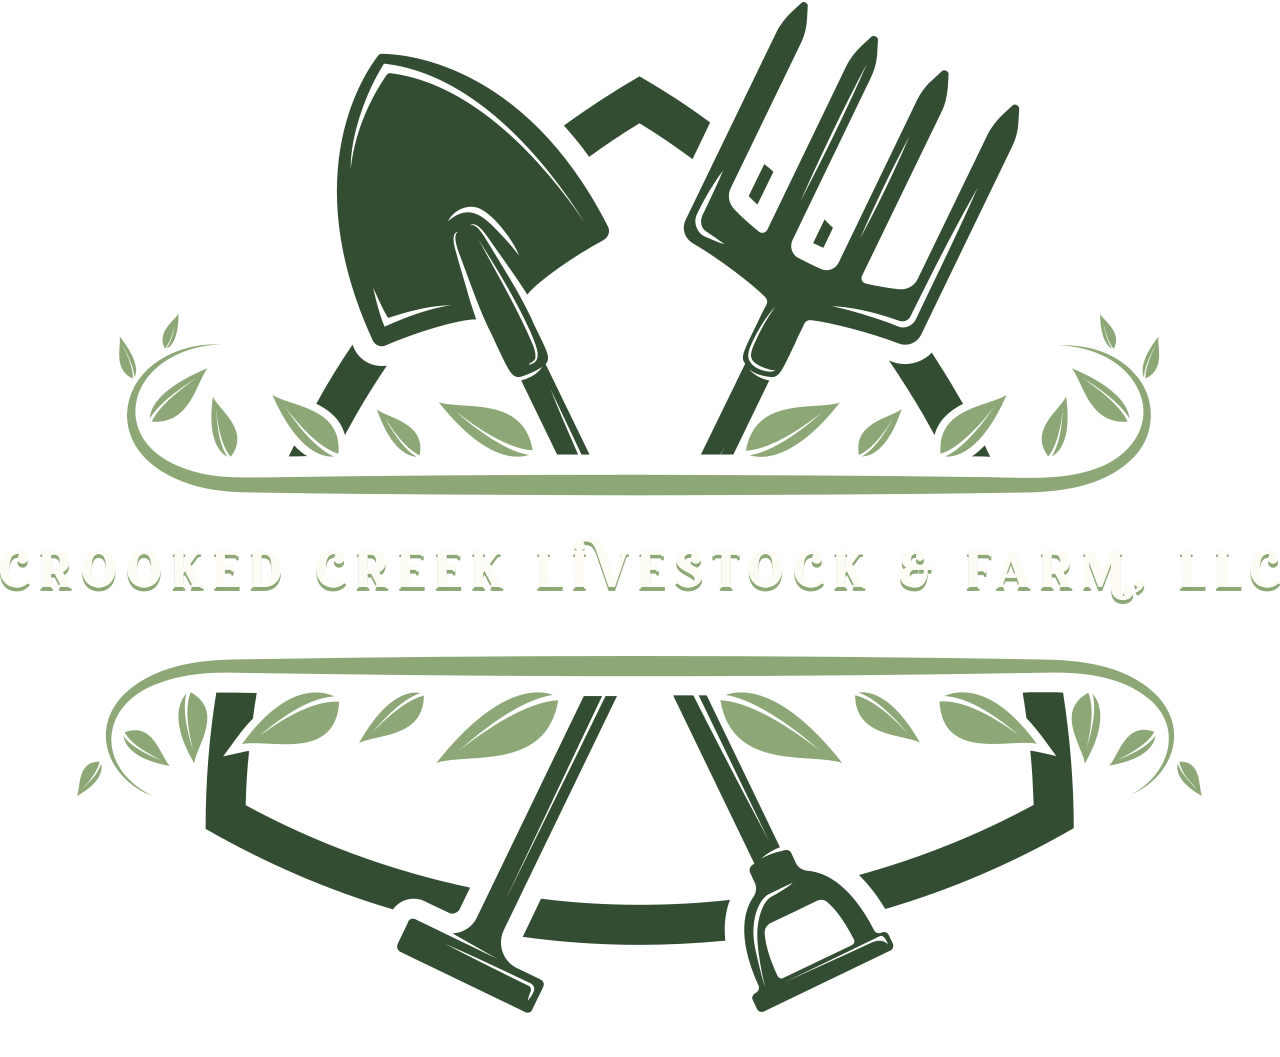 Crooked Creek Livestock & Farm, LLC's logo